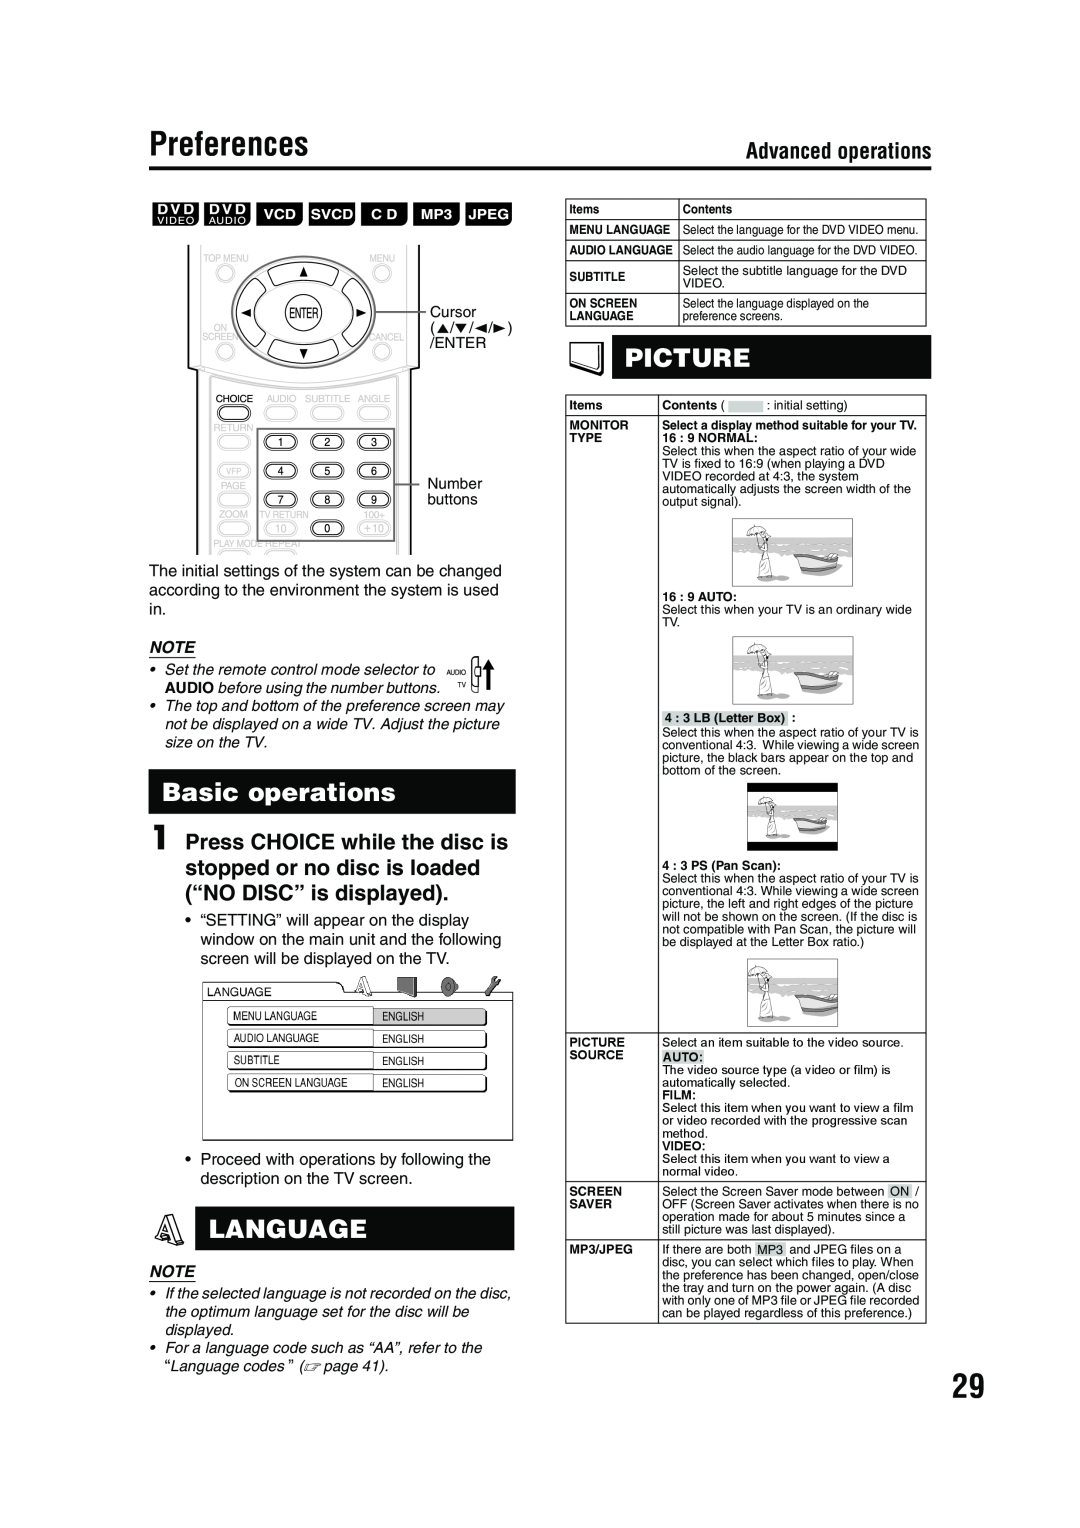 JVC LVT1284-004B manual Preferences, Basic operations, Language, Picture, Advanced operations 